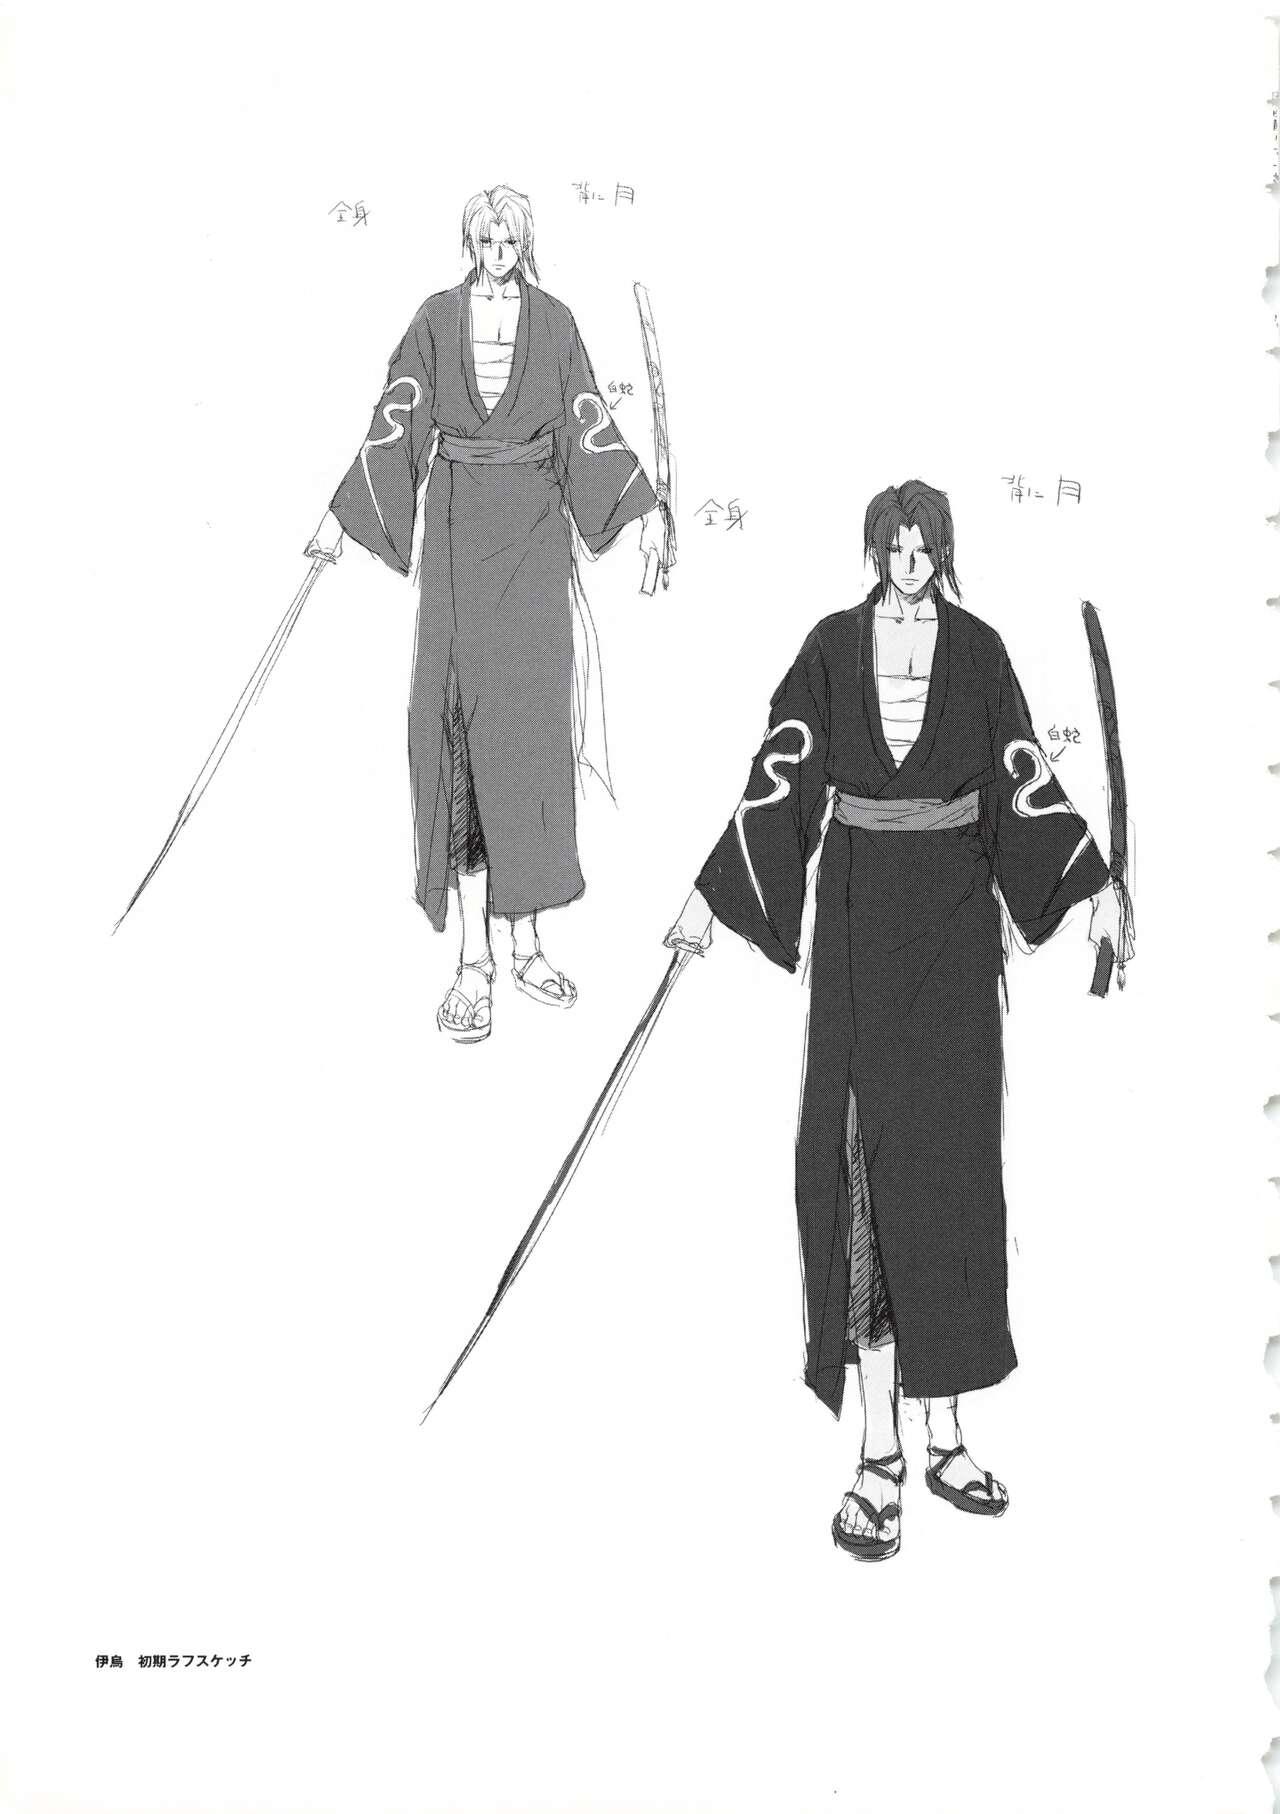 Hanachirasu - Initial Sketches and Unprocessed Illustrations - Selection 9